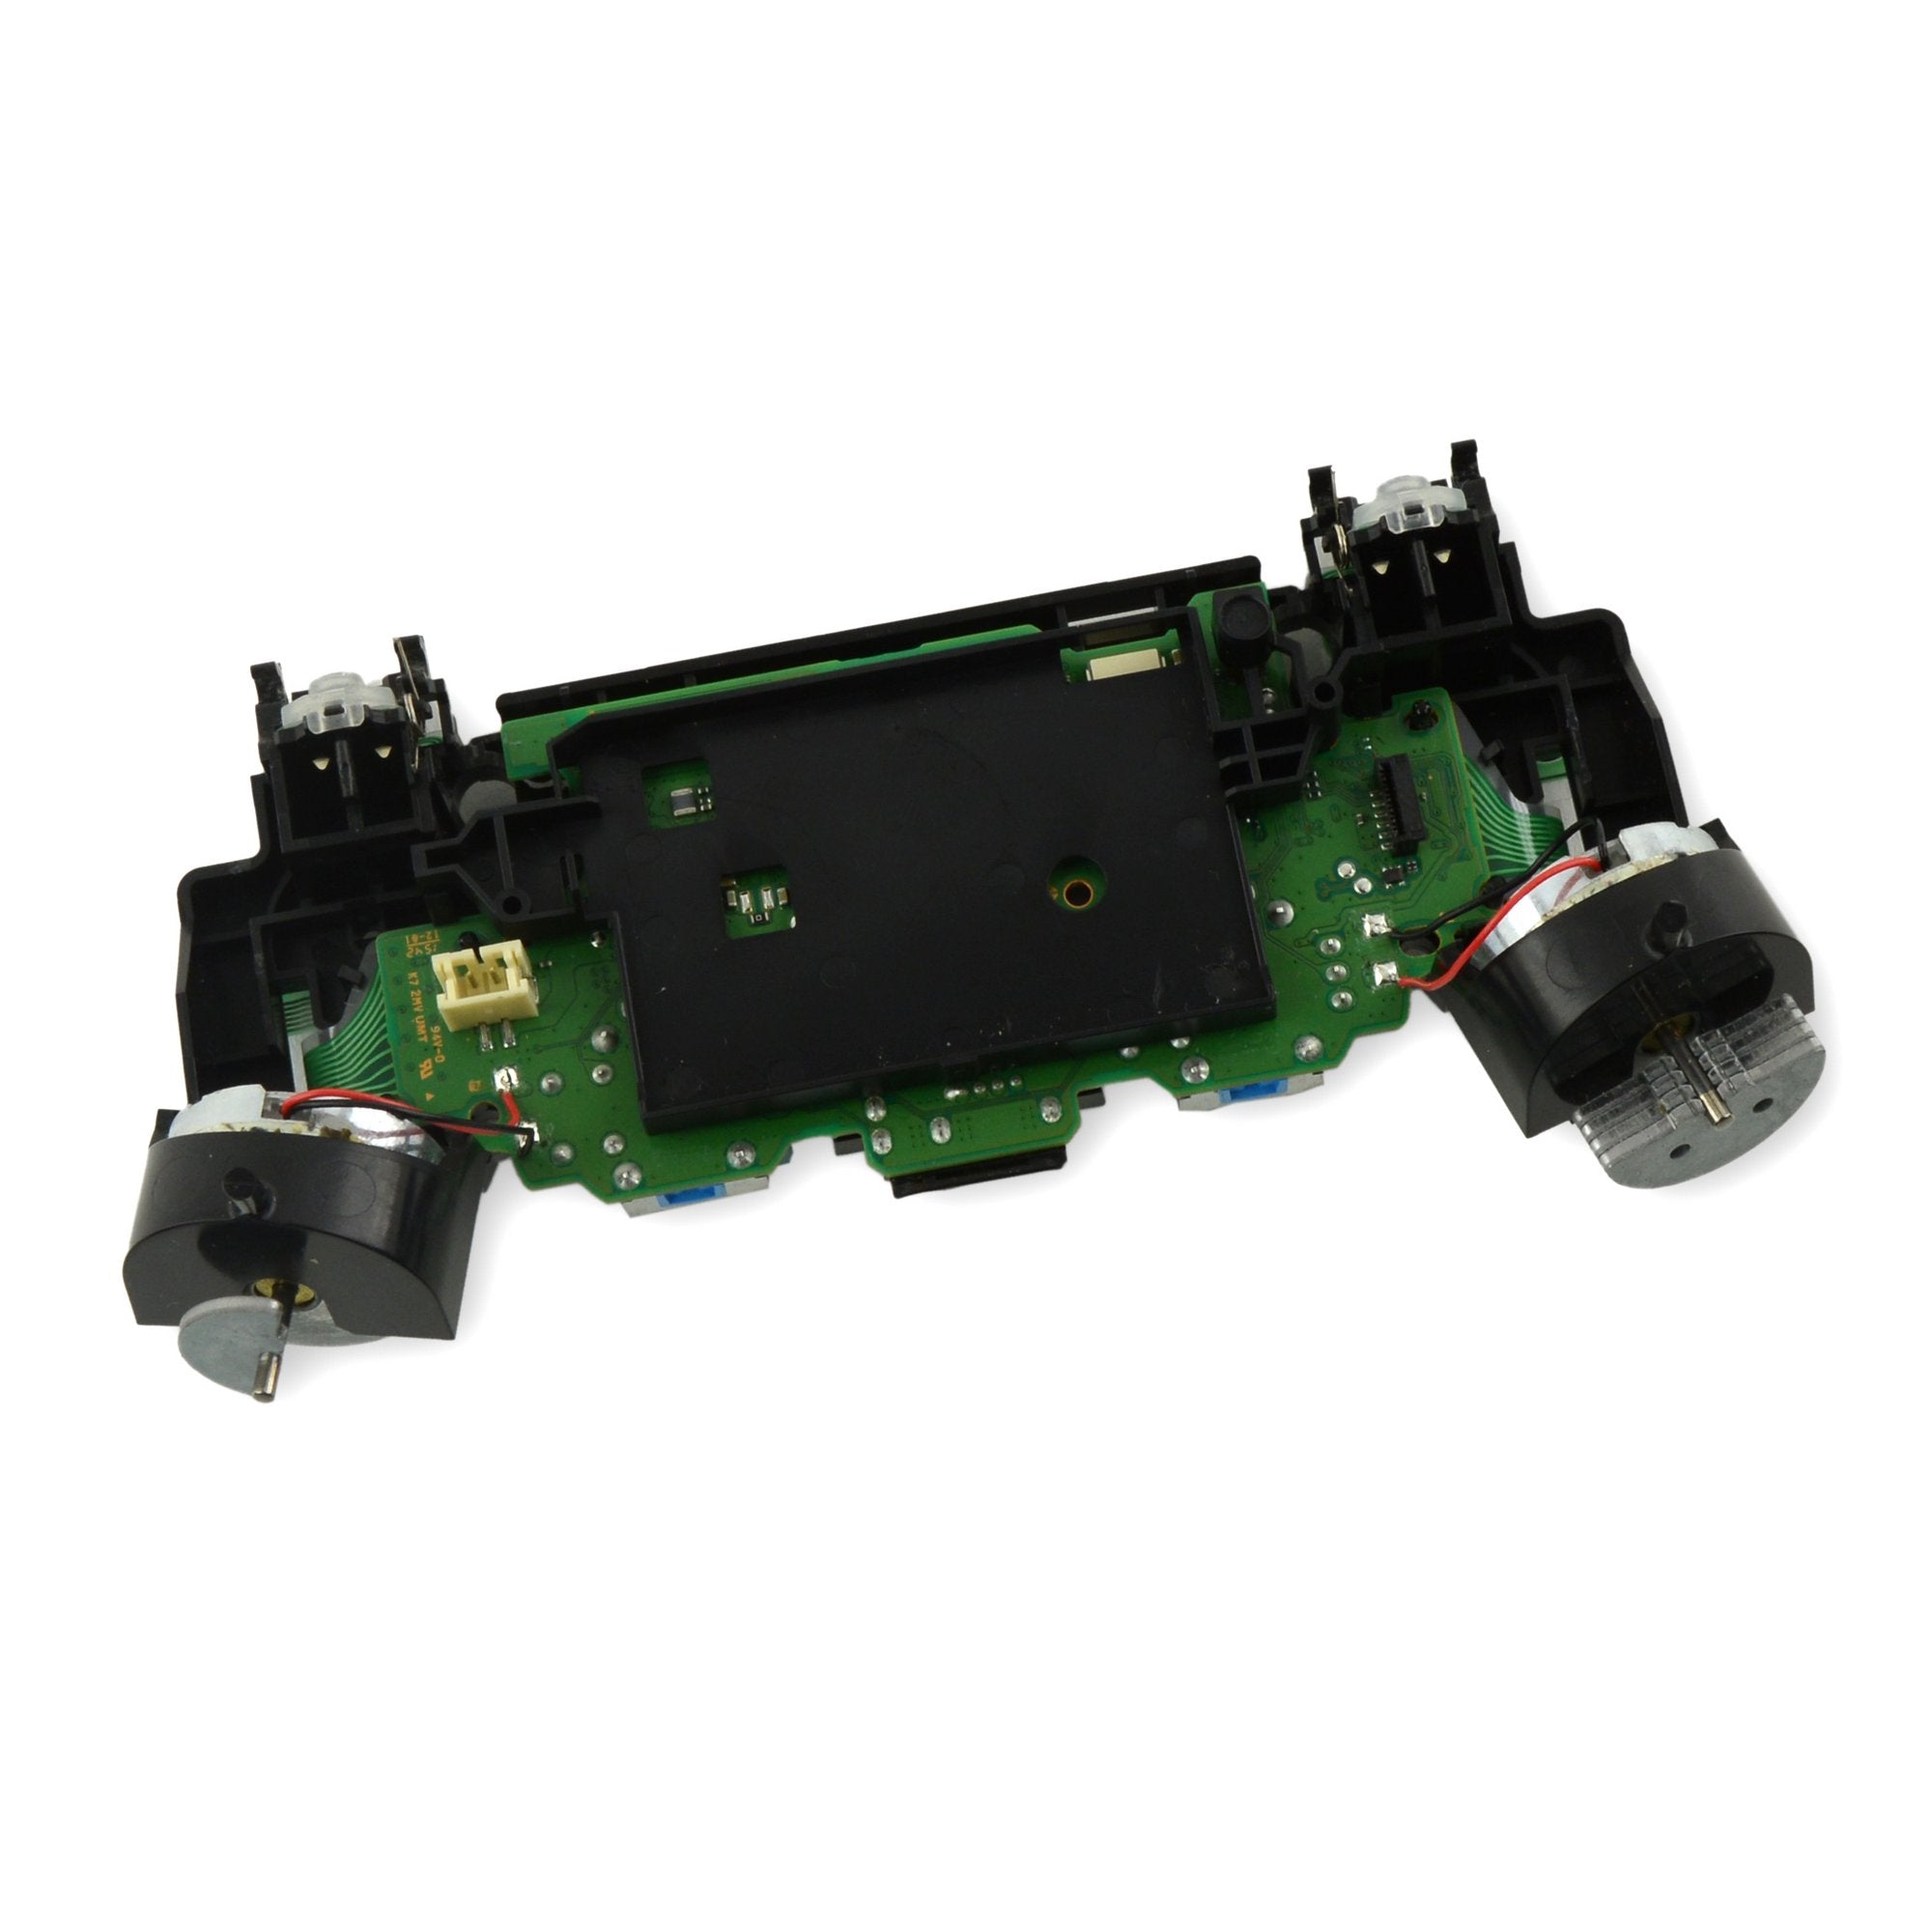 DualShock 4 Controller Motherboard and Midframe Assembly (JDM-030)